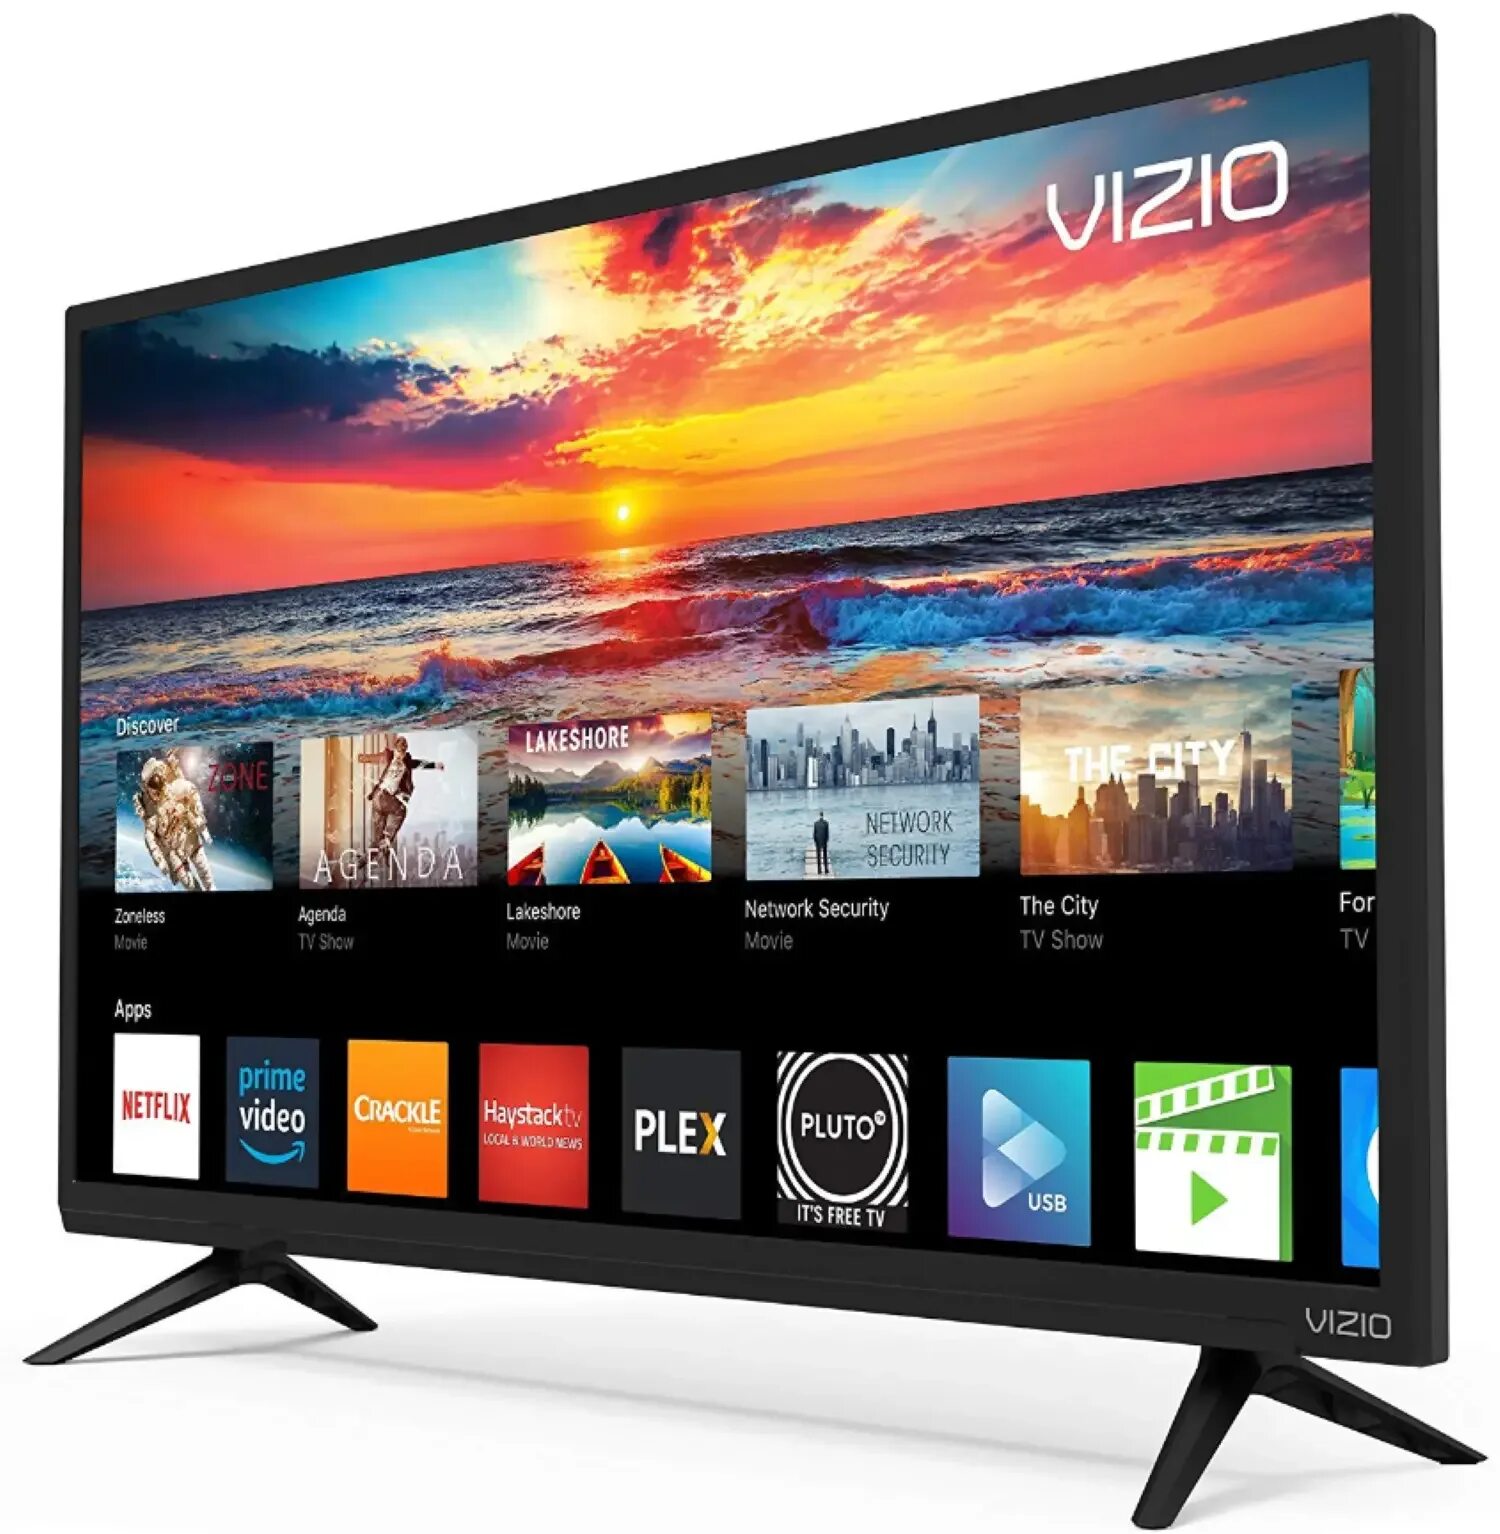 Озон телевизоры смарт тв. Vizio SMARTCAST Smart TV телевизор. Смарт ТВ телевизор 32 дюйма и Wi-Fi. Телевизоры 32 Smart TV китайские. Смарт ТВ 100 дюймов китайские недорогие.